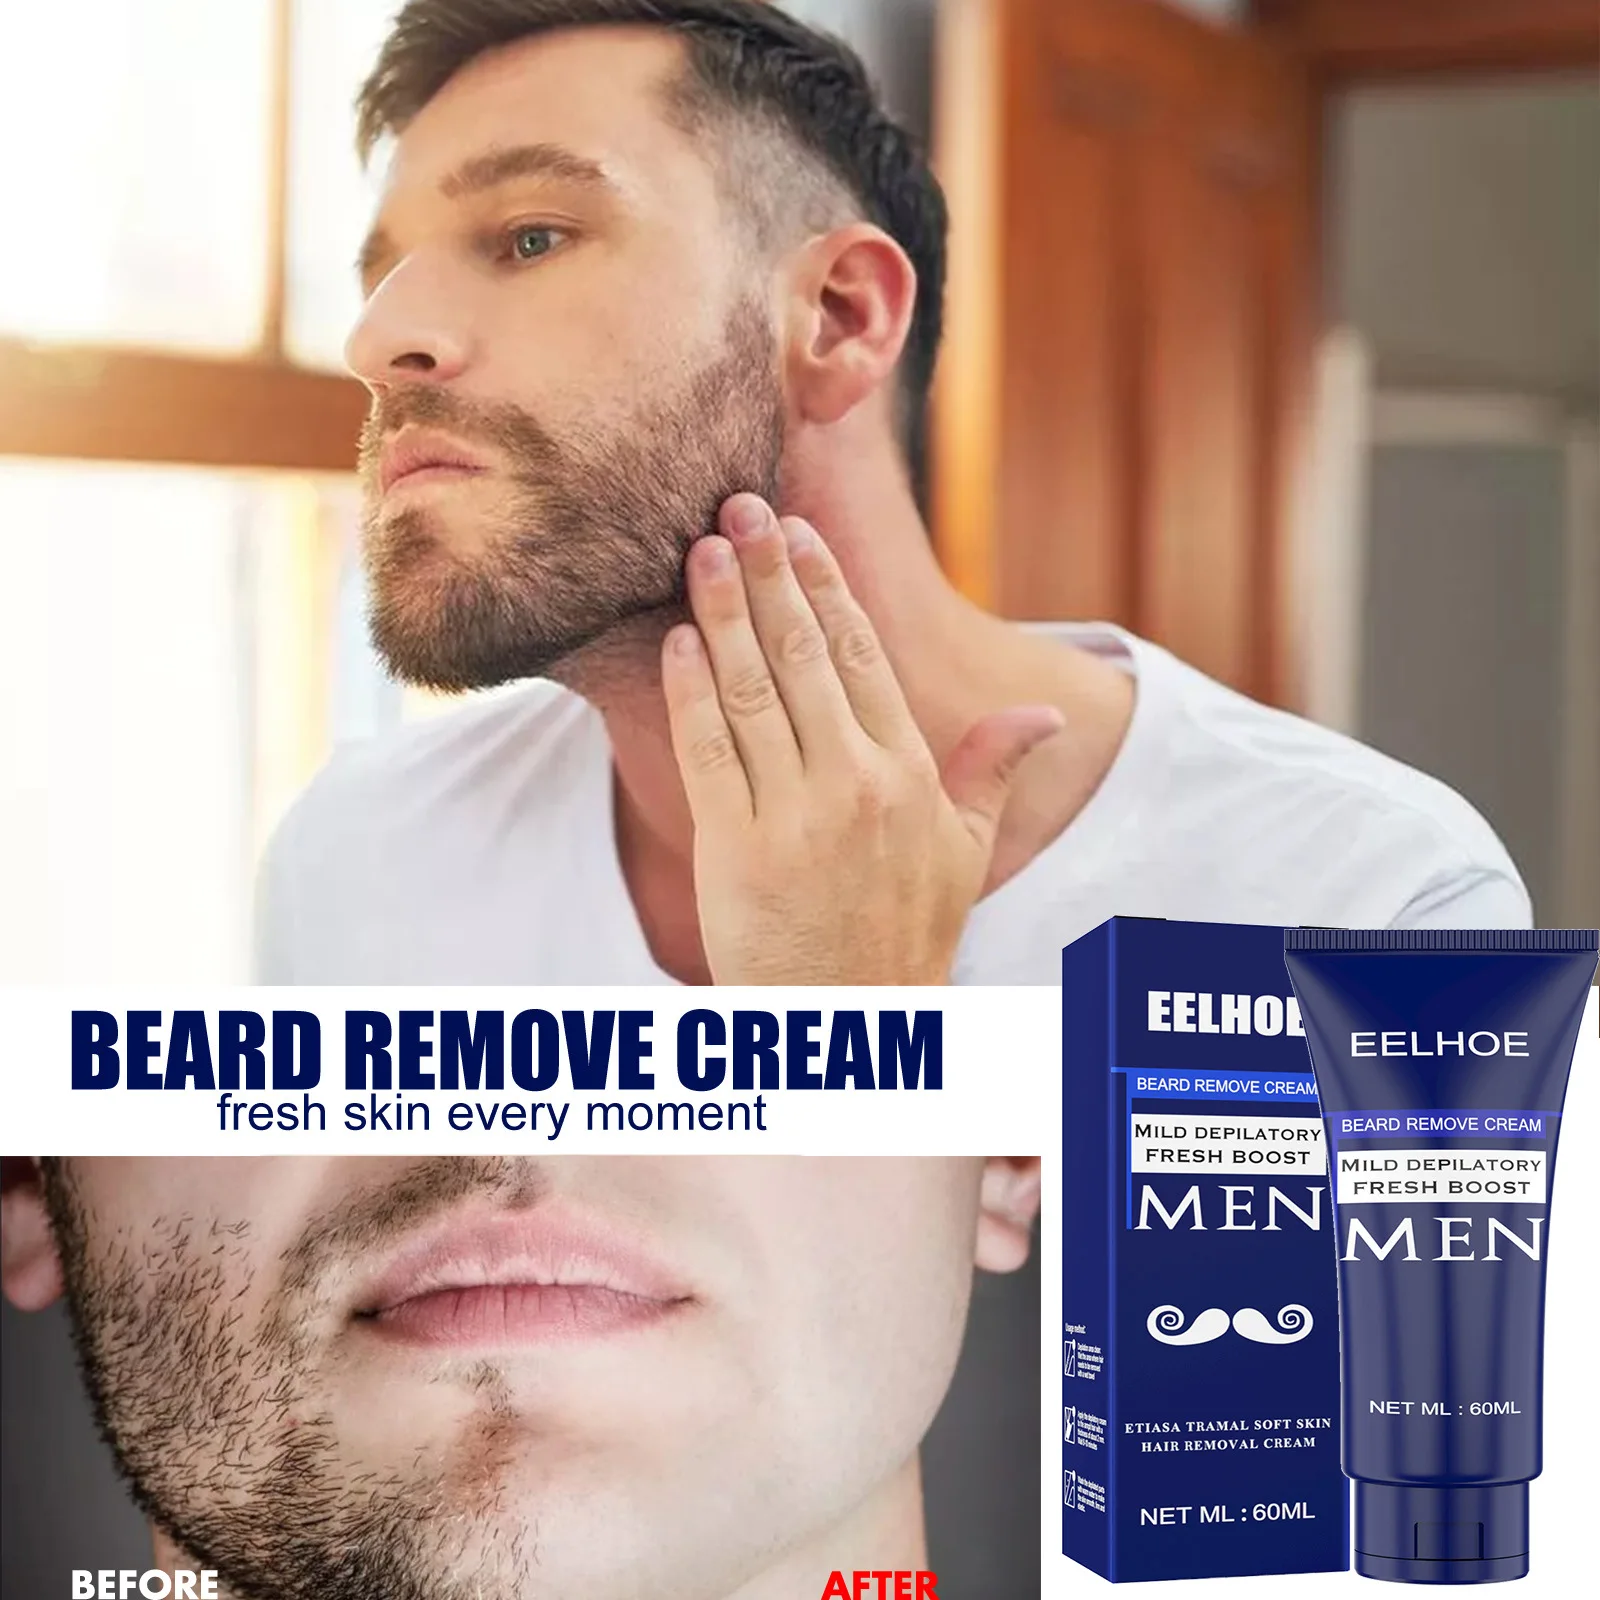 

60ml Men's Hair Removal Cream Body Chest Hair Beard Hair Removal Cream Hand Armpit Hair Removal Cleansing Gentle Not Stimulating